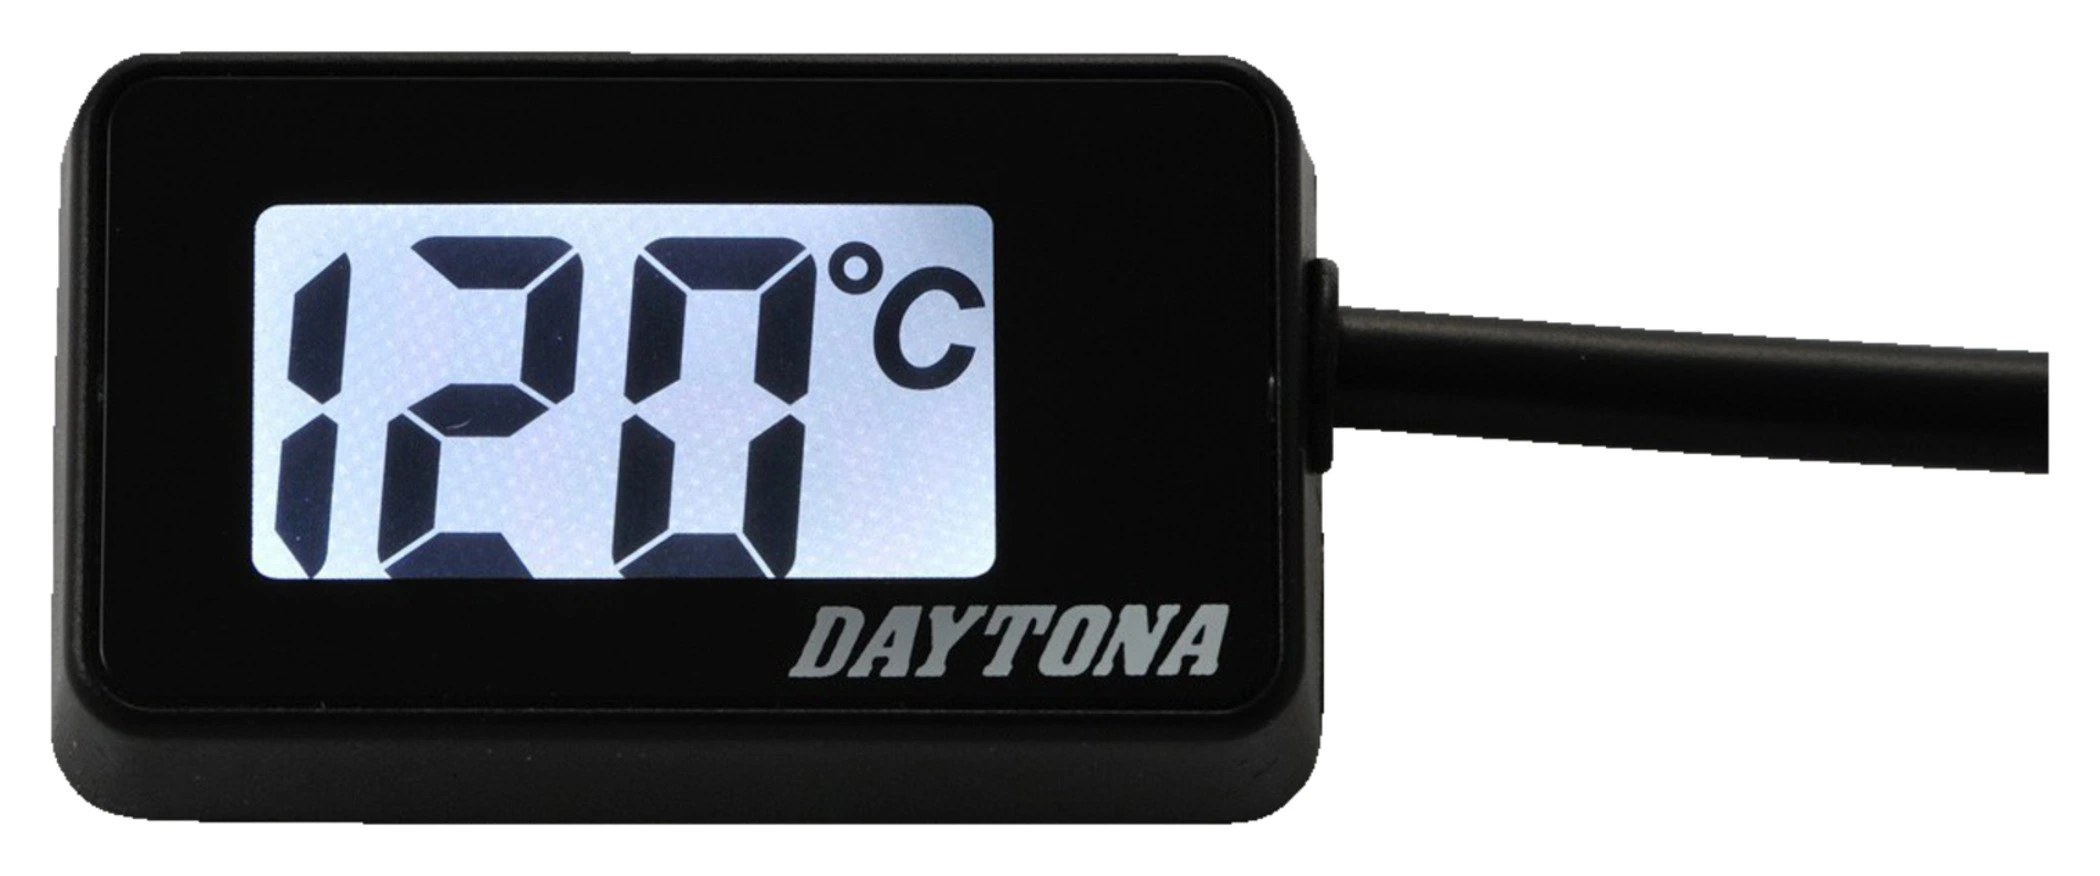 Daytona Corporation INDIC. TEMPÉRATURE HUILE UNIVERSEL LCD DAYTONA